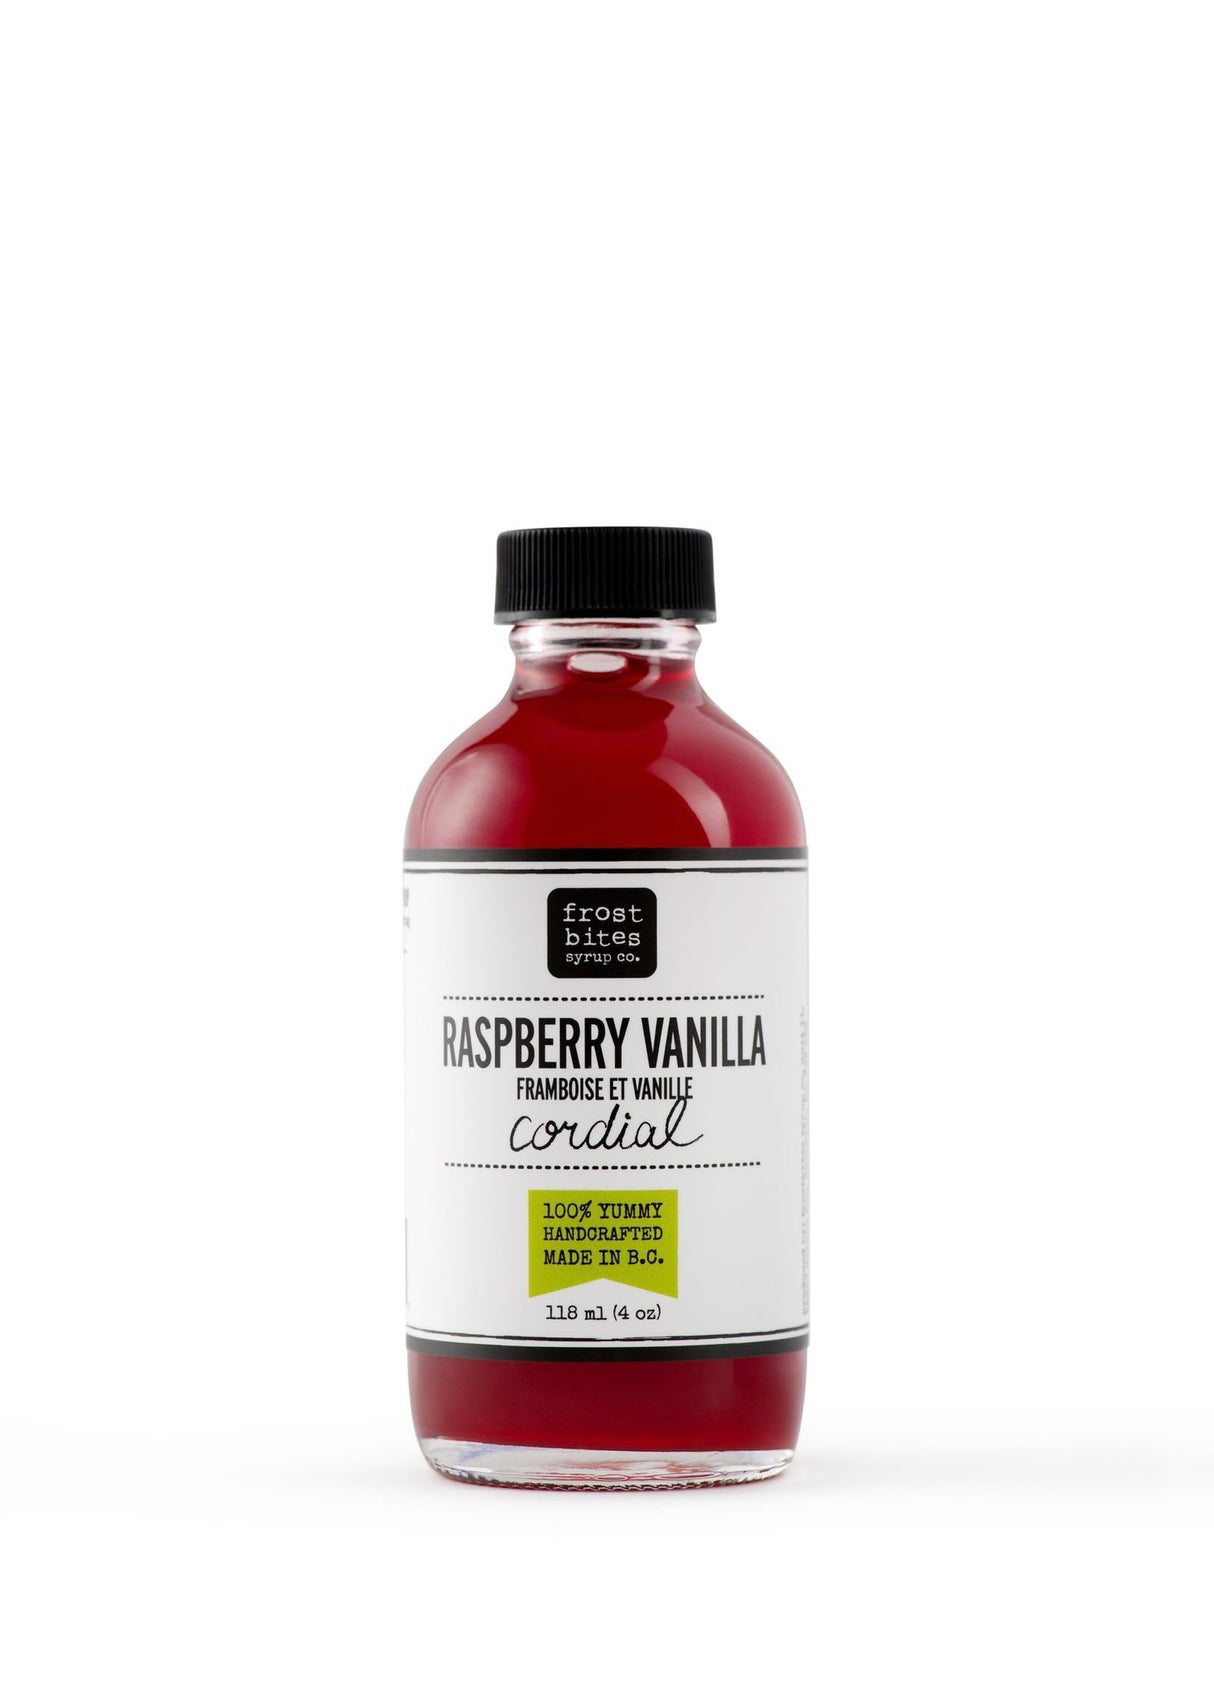 Raspberry Vanilla Cordial